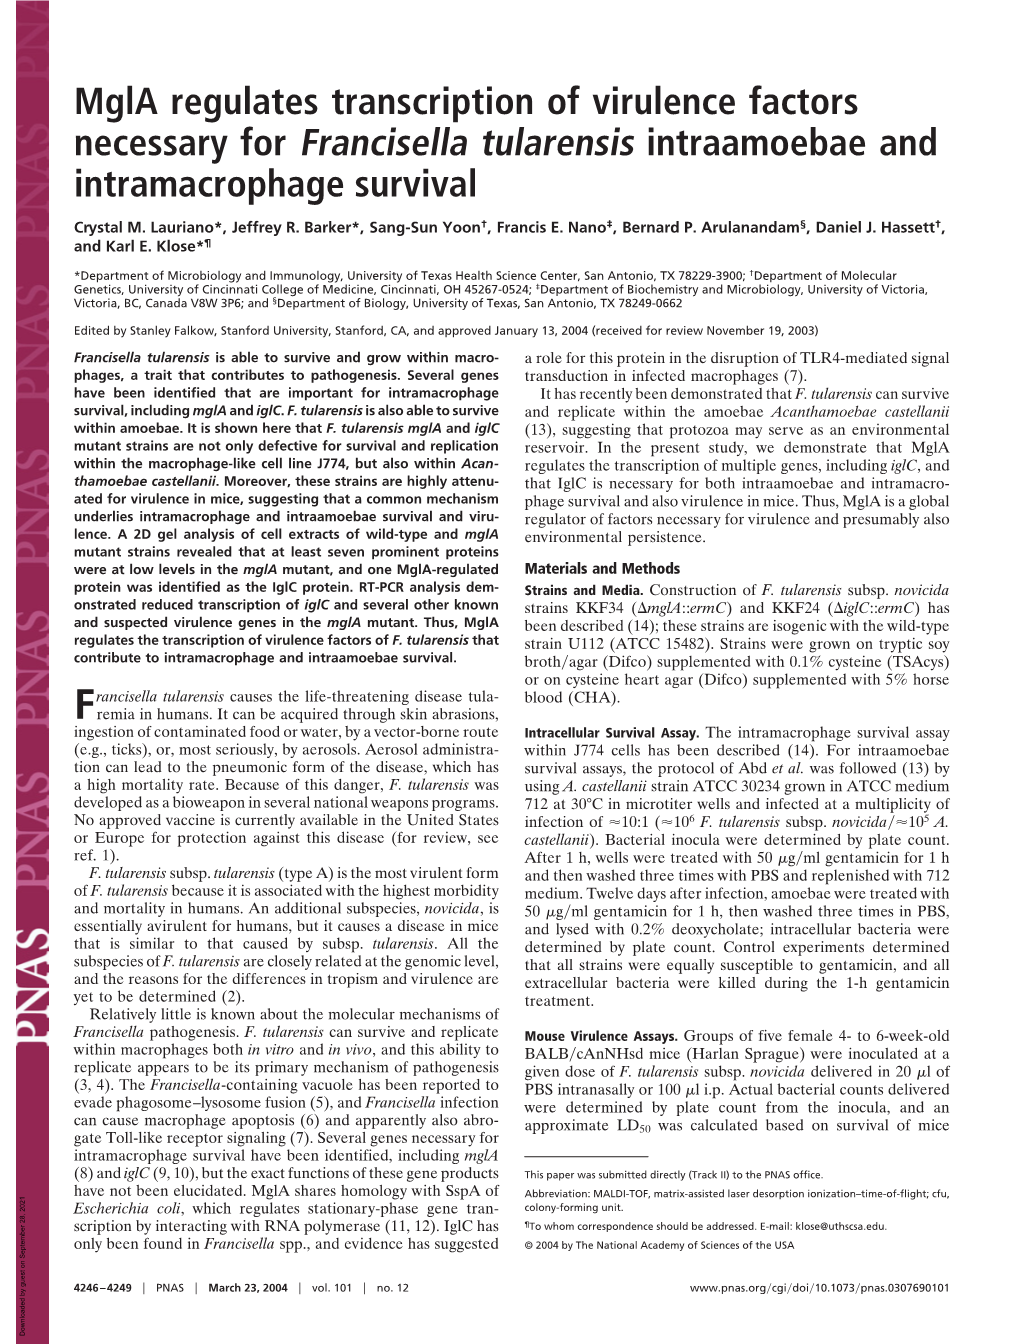 Mgla Regulates Transcription of Virulence Factors Necessary for Francisella Tularensis Intraamoebae and Intramacrophage Survival